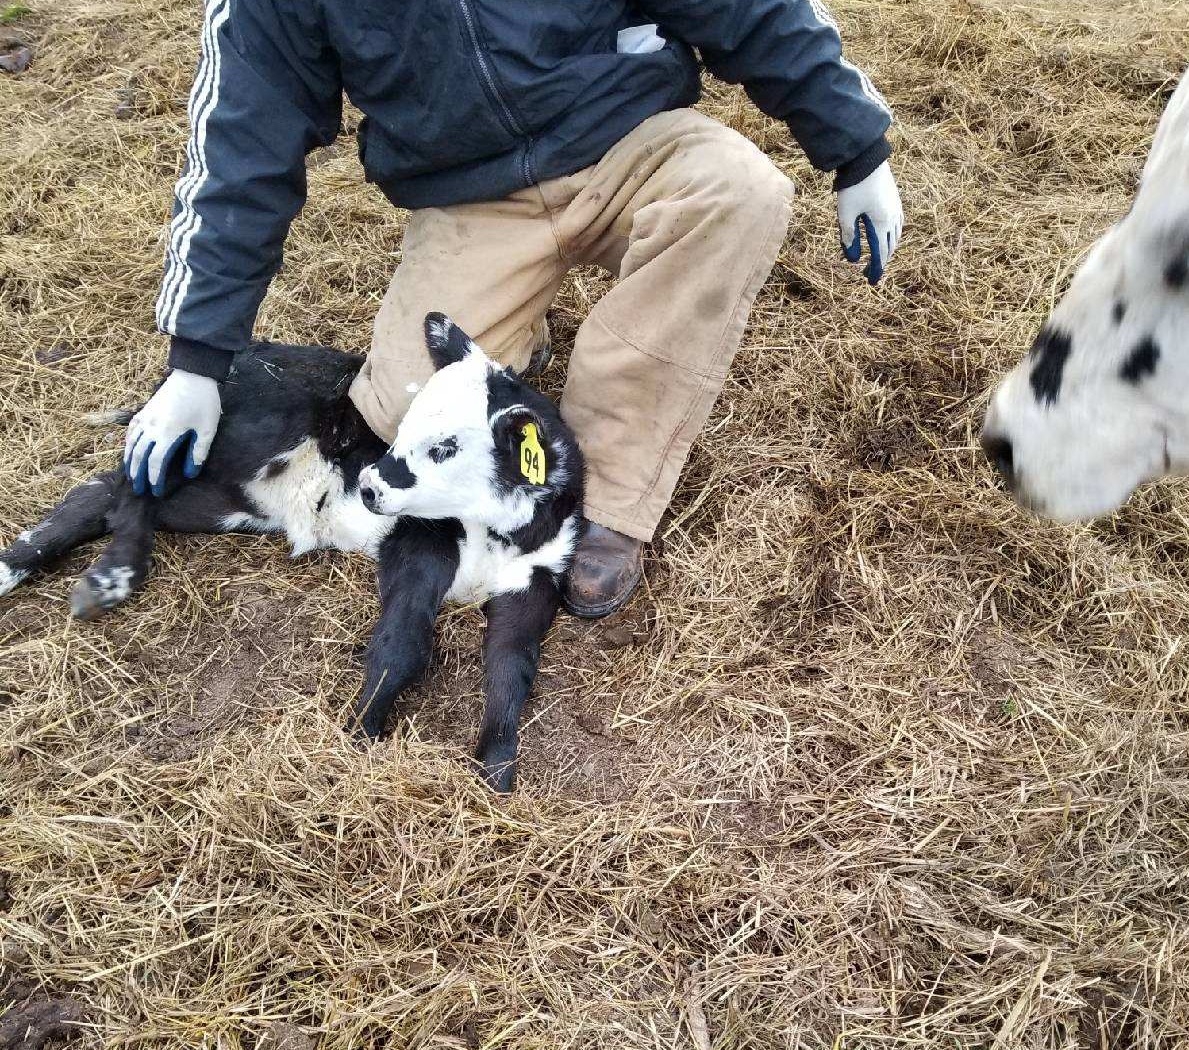 Our new little girl calf, #94